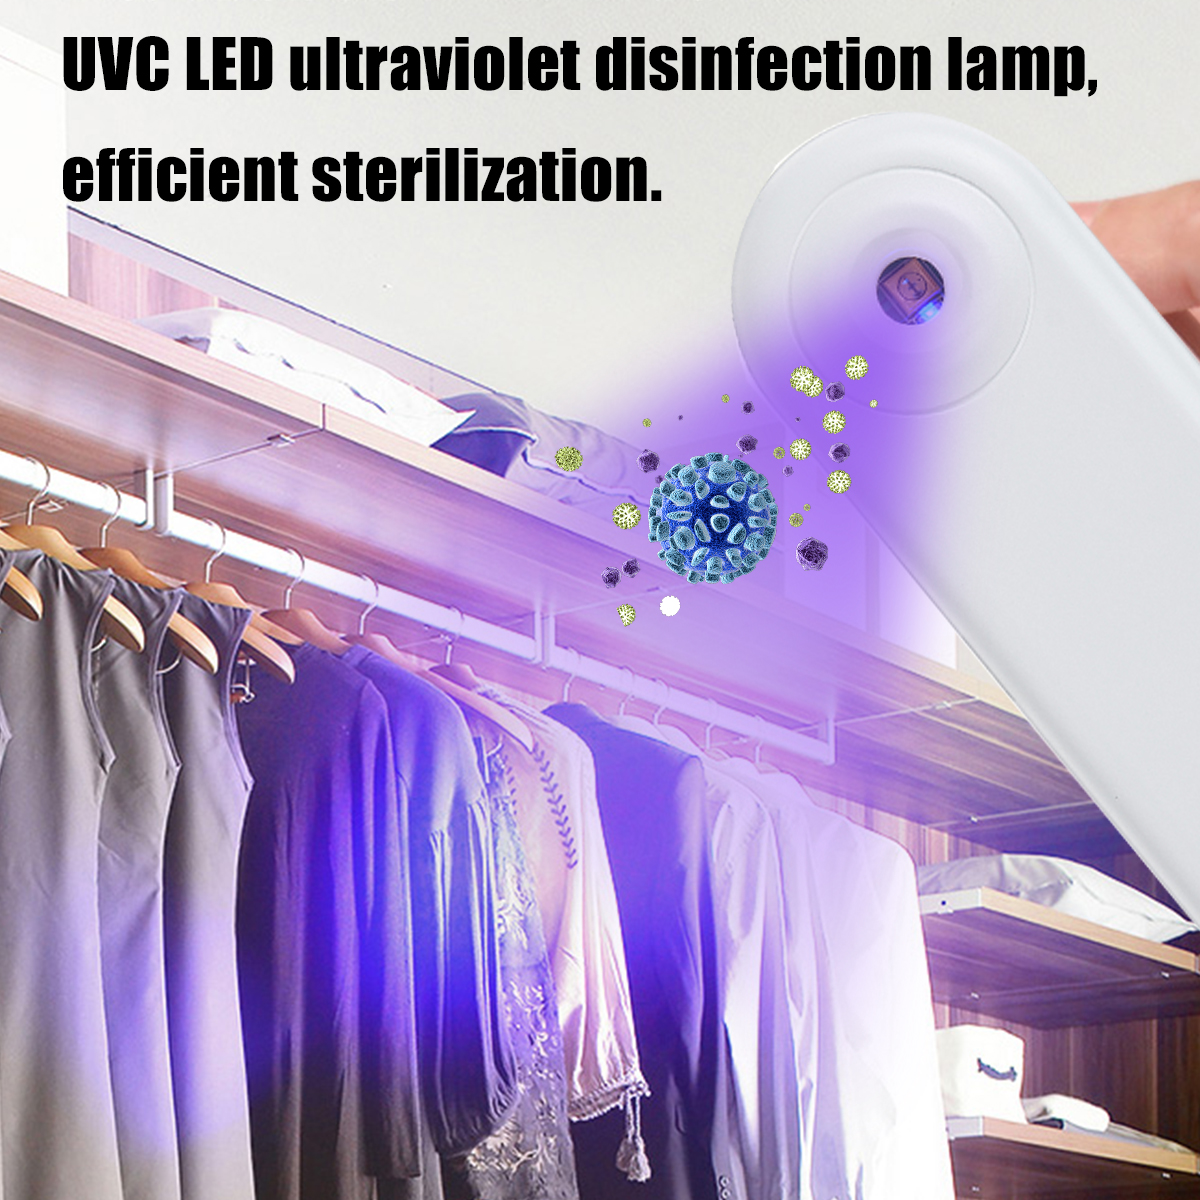 Portable-Handheld-Home-UV-Lamp-Rechargeable-USB-Sterilizer-UV-C-Light-Germicide-Lighting-DC5V-1667021-2